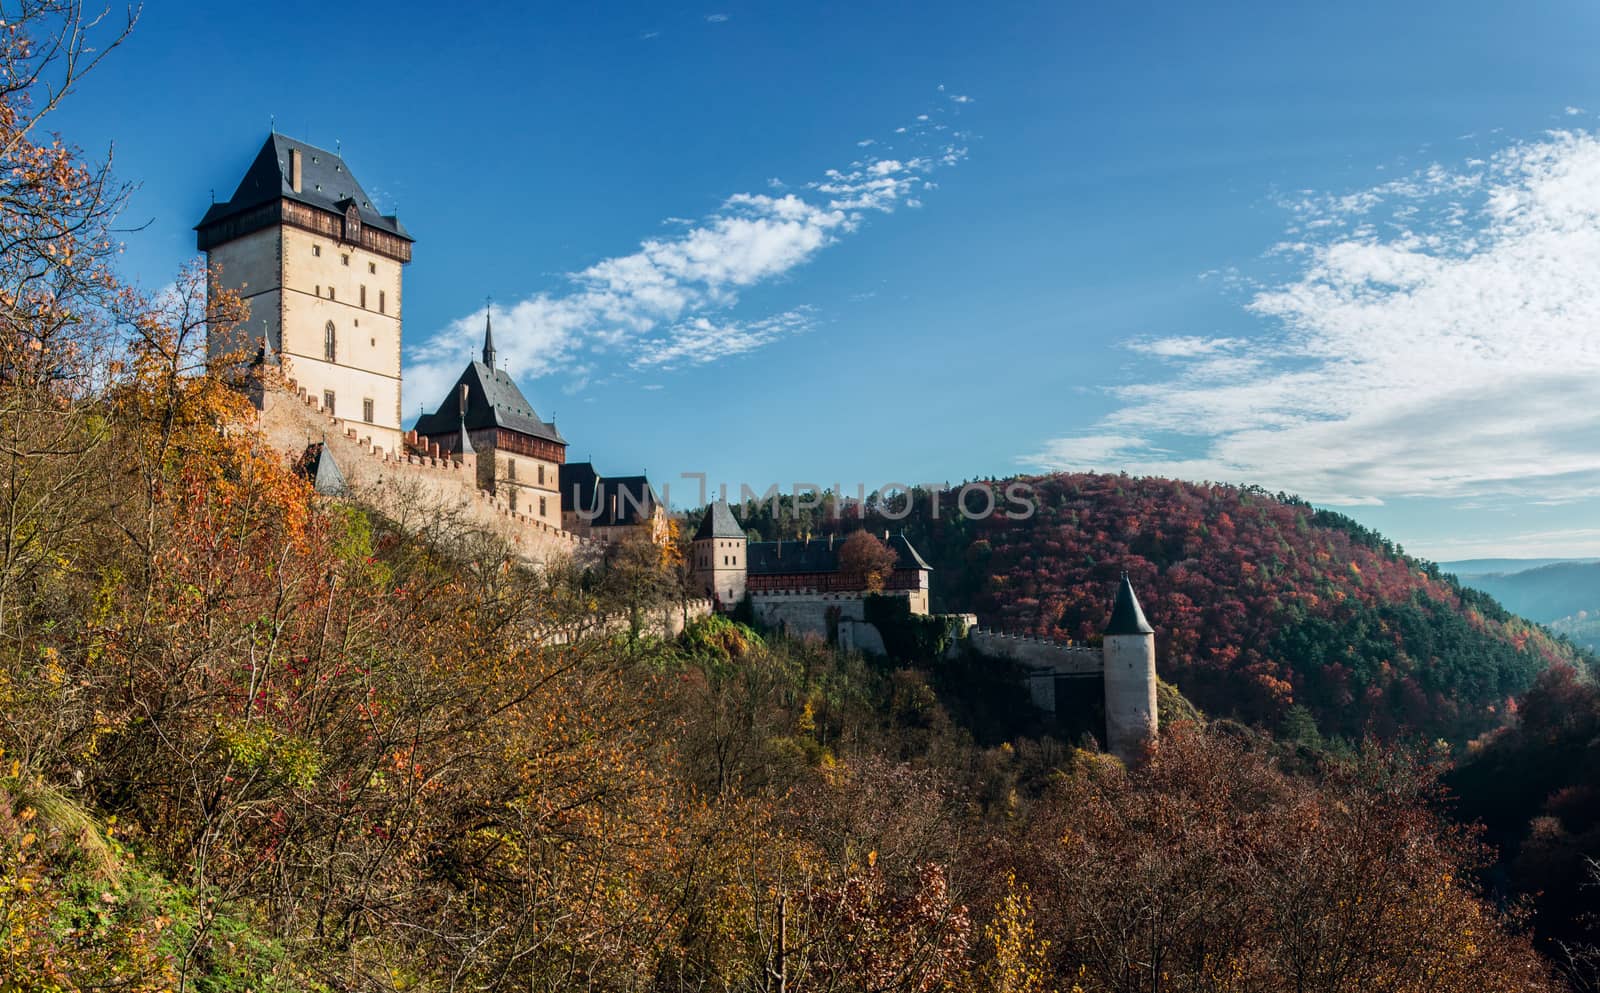 Karlstejn castle in autumn colors

